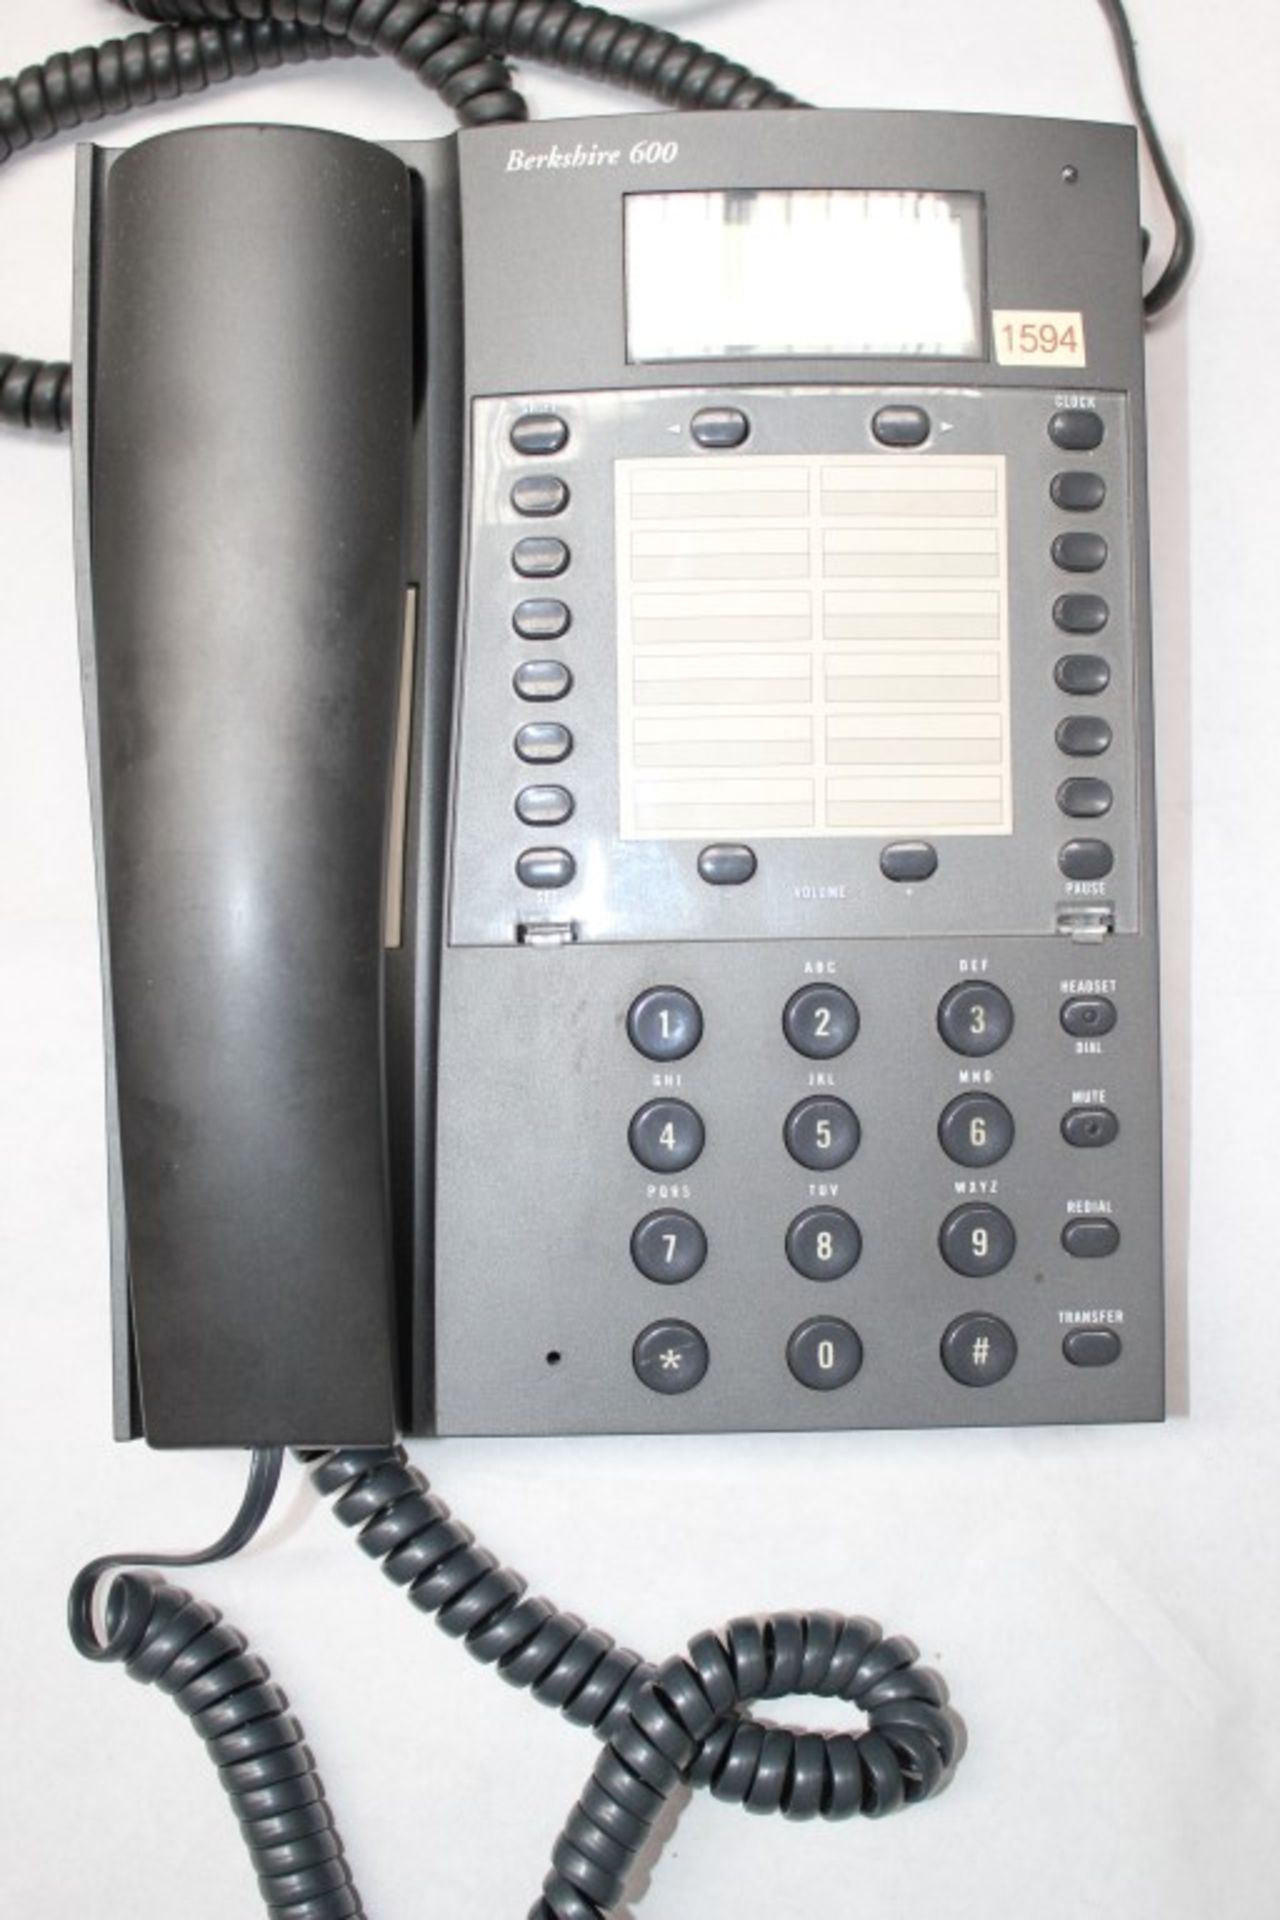 4 x ATL Professional Office Telephones - Model: Berkshire 600 - Pre-owned In Working Order - Taken - Image 2 of 3